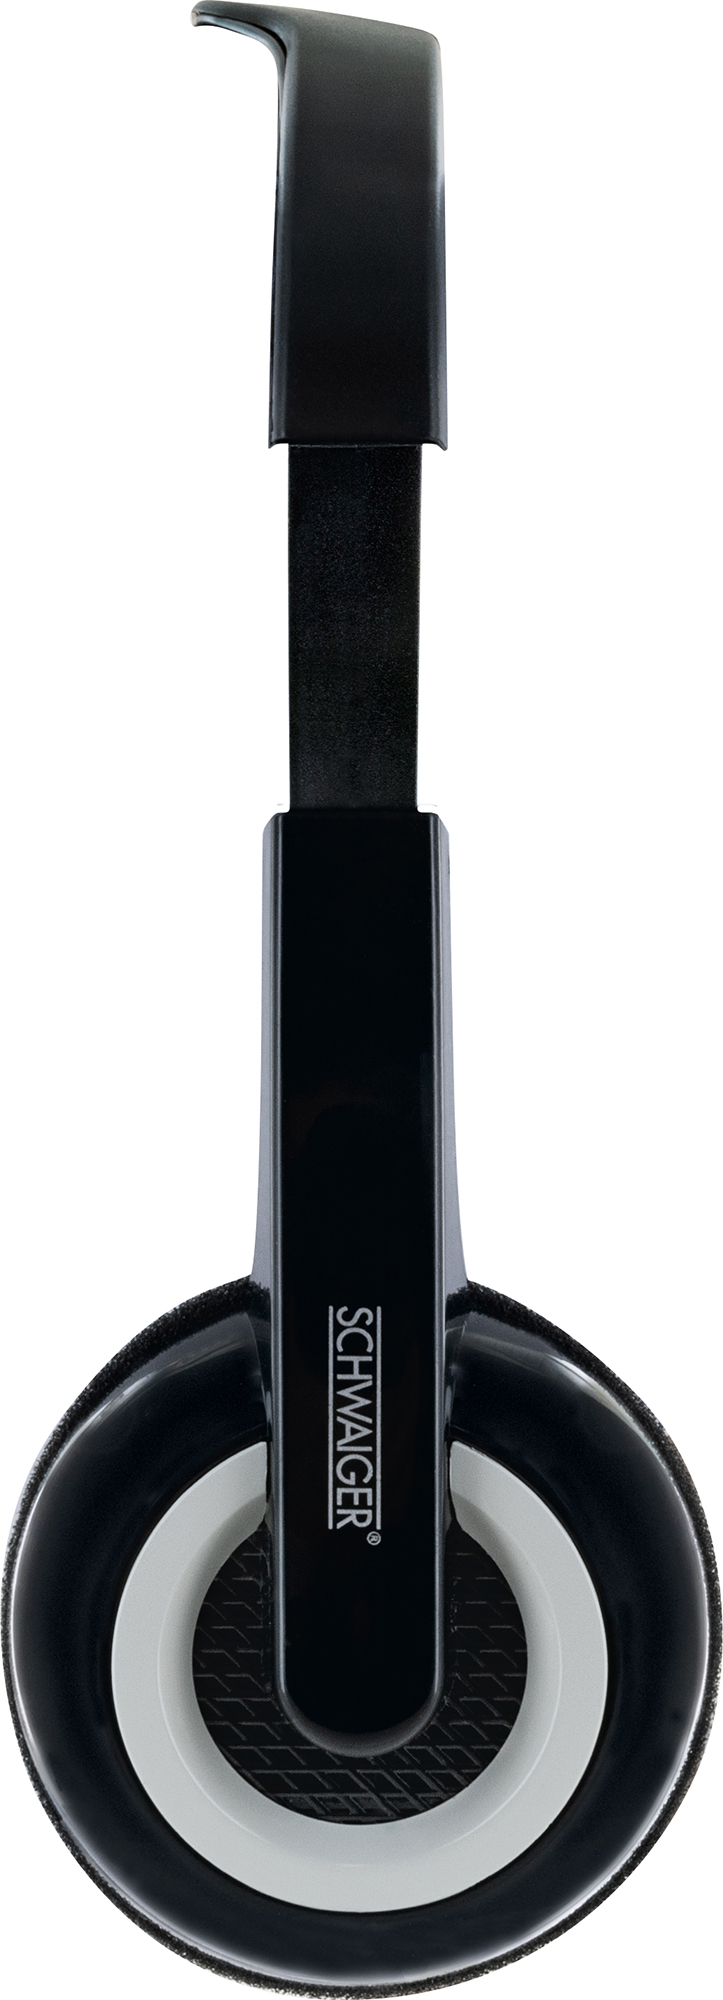 SCHWAIGER -HS1000 013-, On-ear PC schwarz Headset